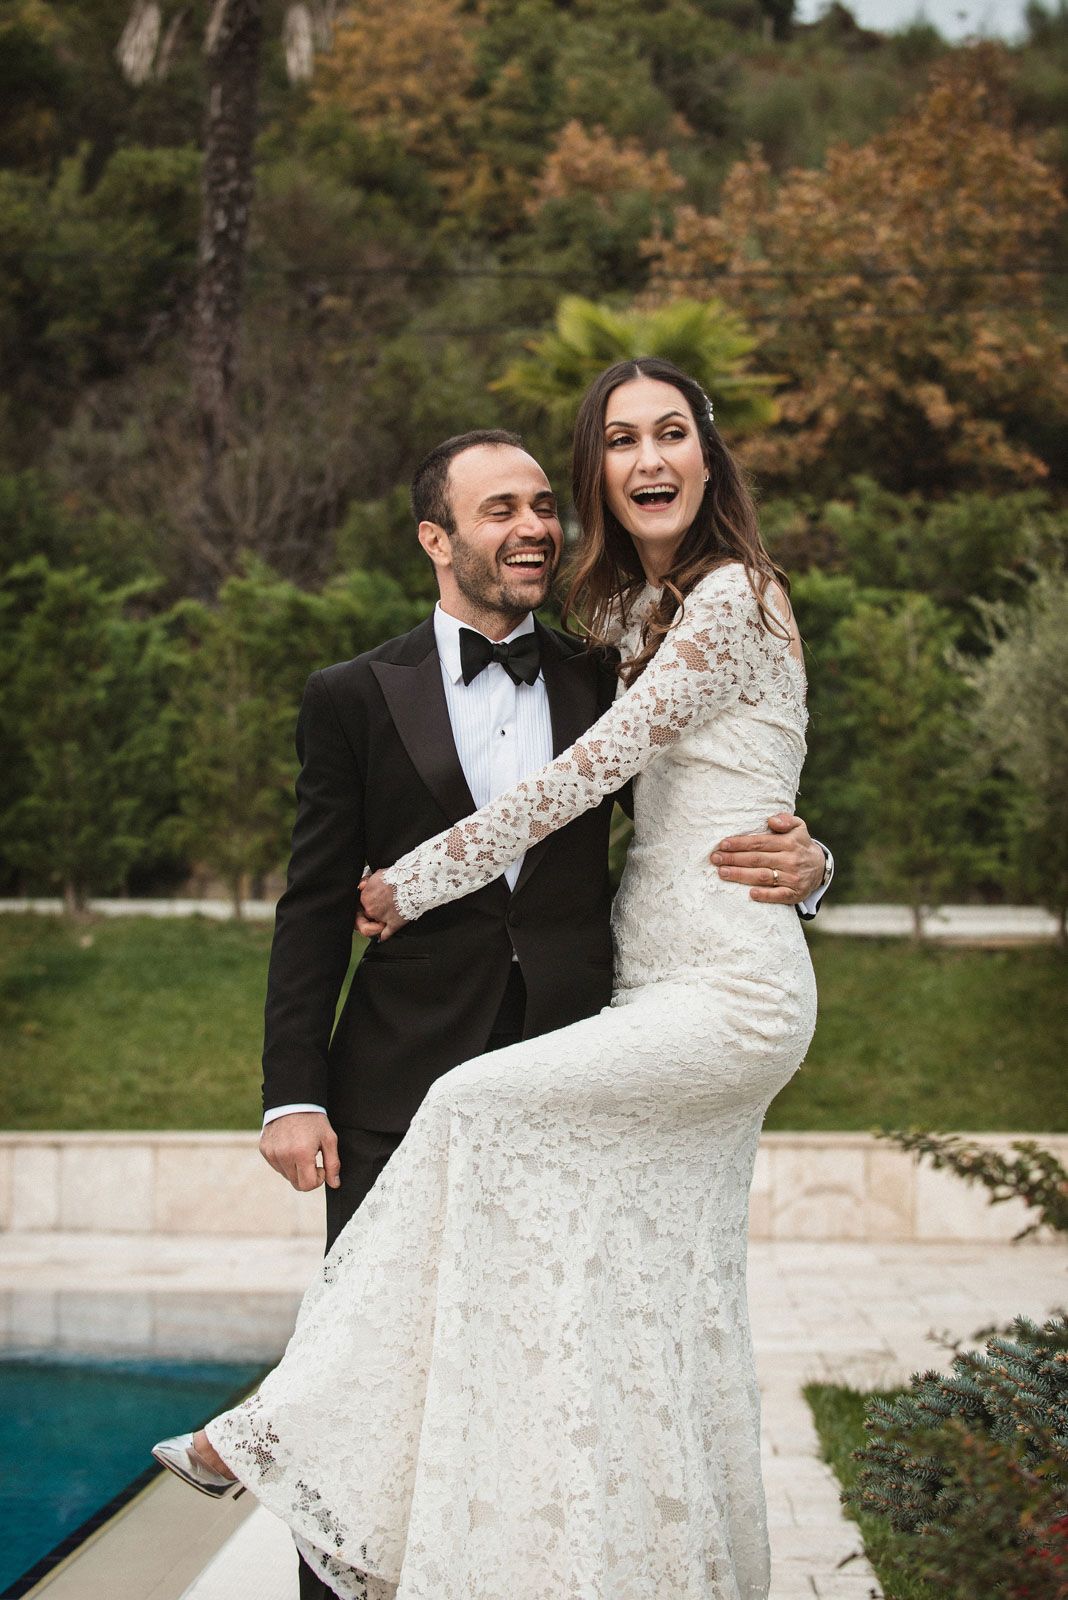 Işık & Ismail Wedding Photo Shoot. Umur Dilek Wedding Photography. Destination Wedding Photographer istanbul based